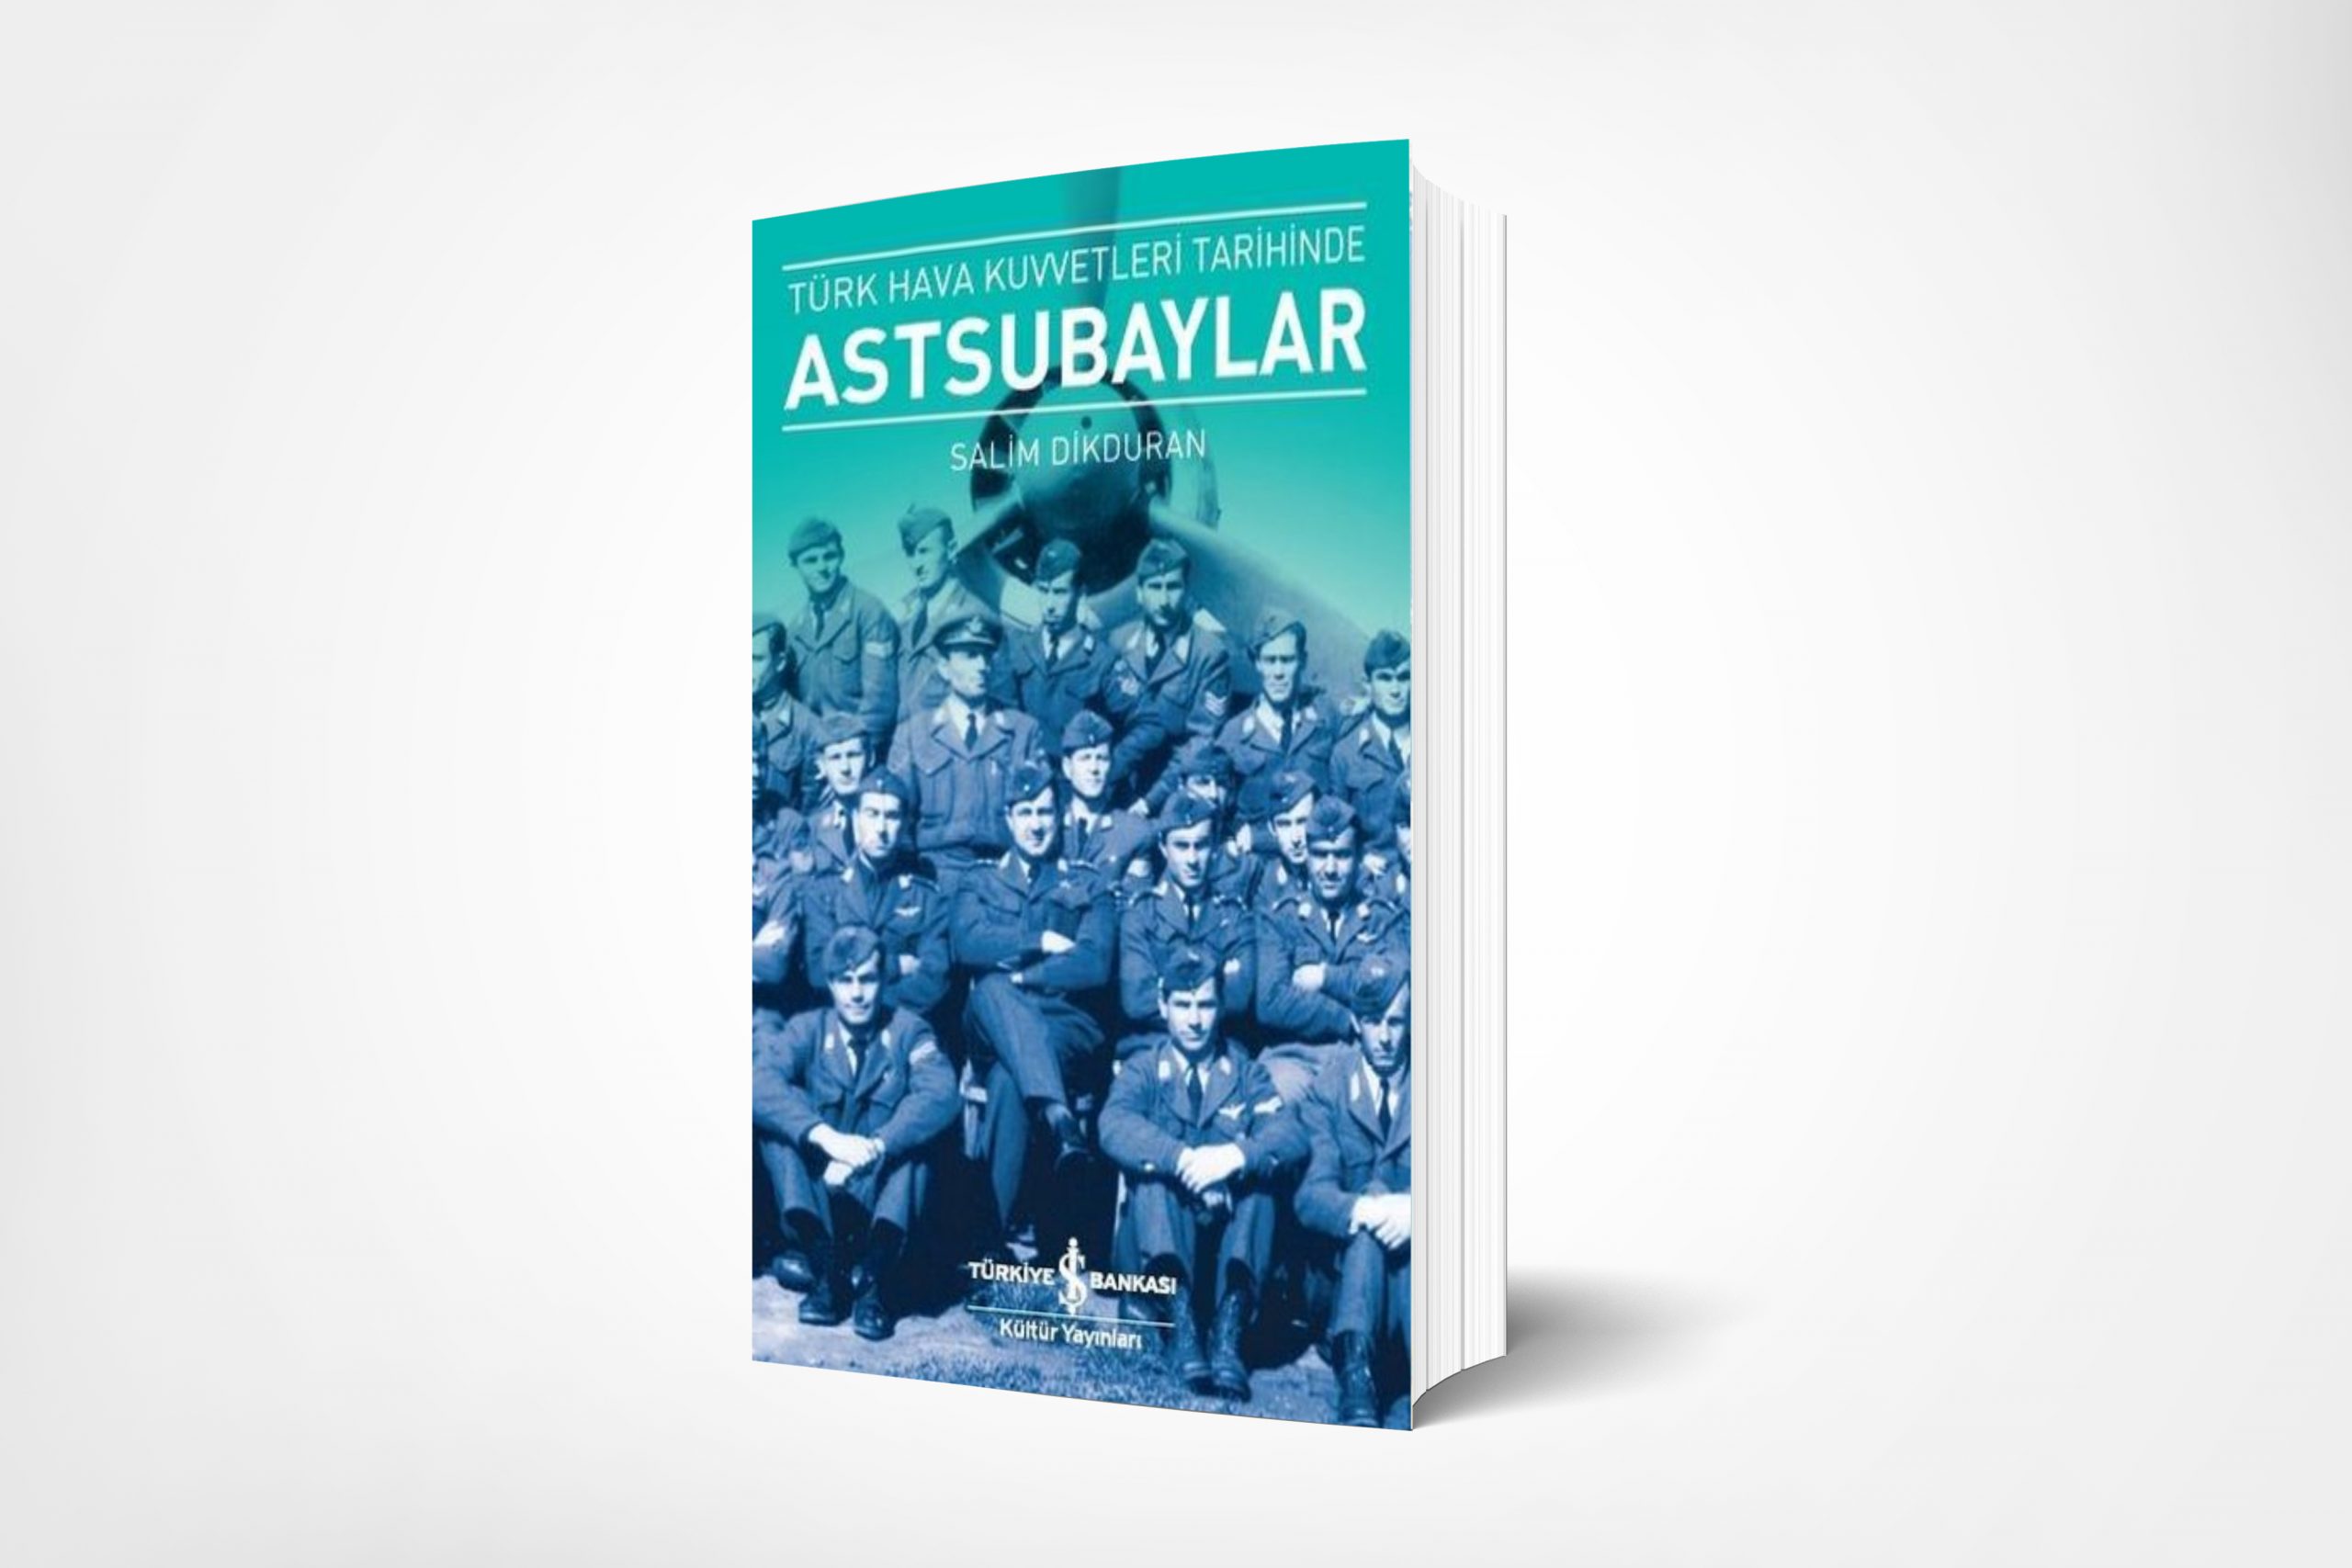 Türk Hava Kuvvetleri Tarihinde Astsubaylar (Petty Officers in the History of the Turkish Air Force)